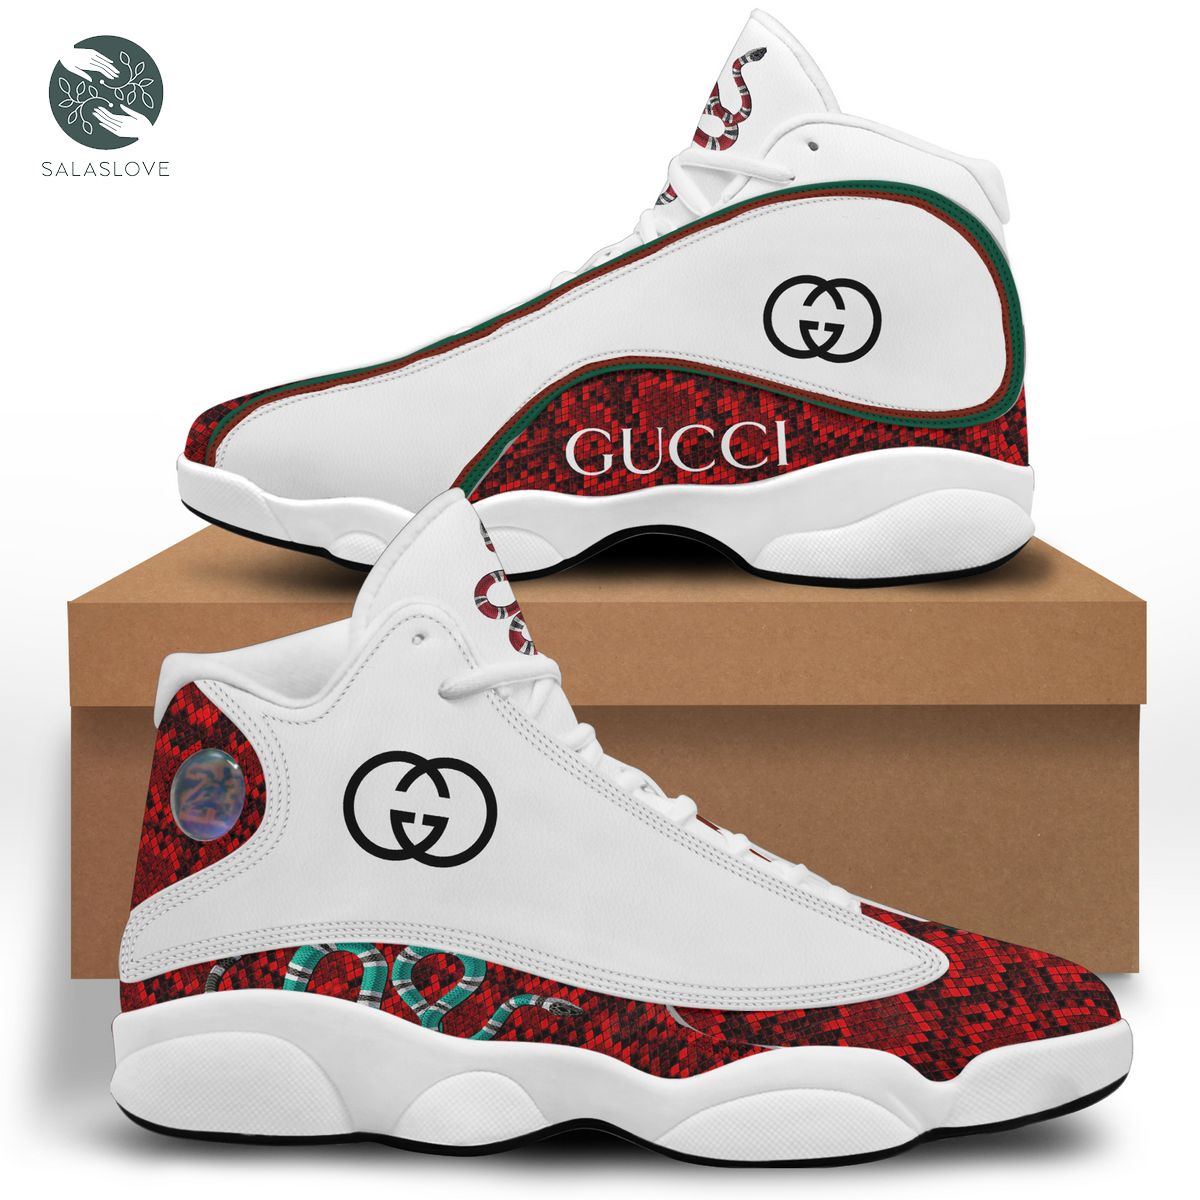 Gucci snake air jordan 13 sneakers shoes gifts